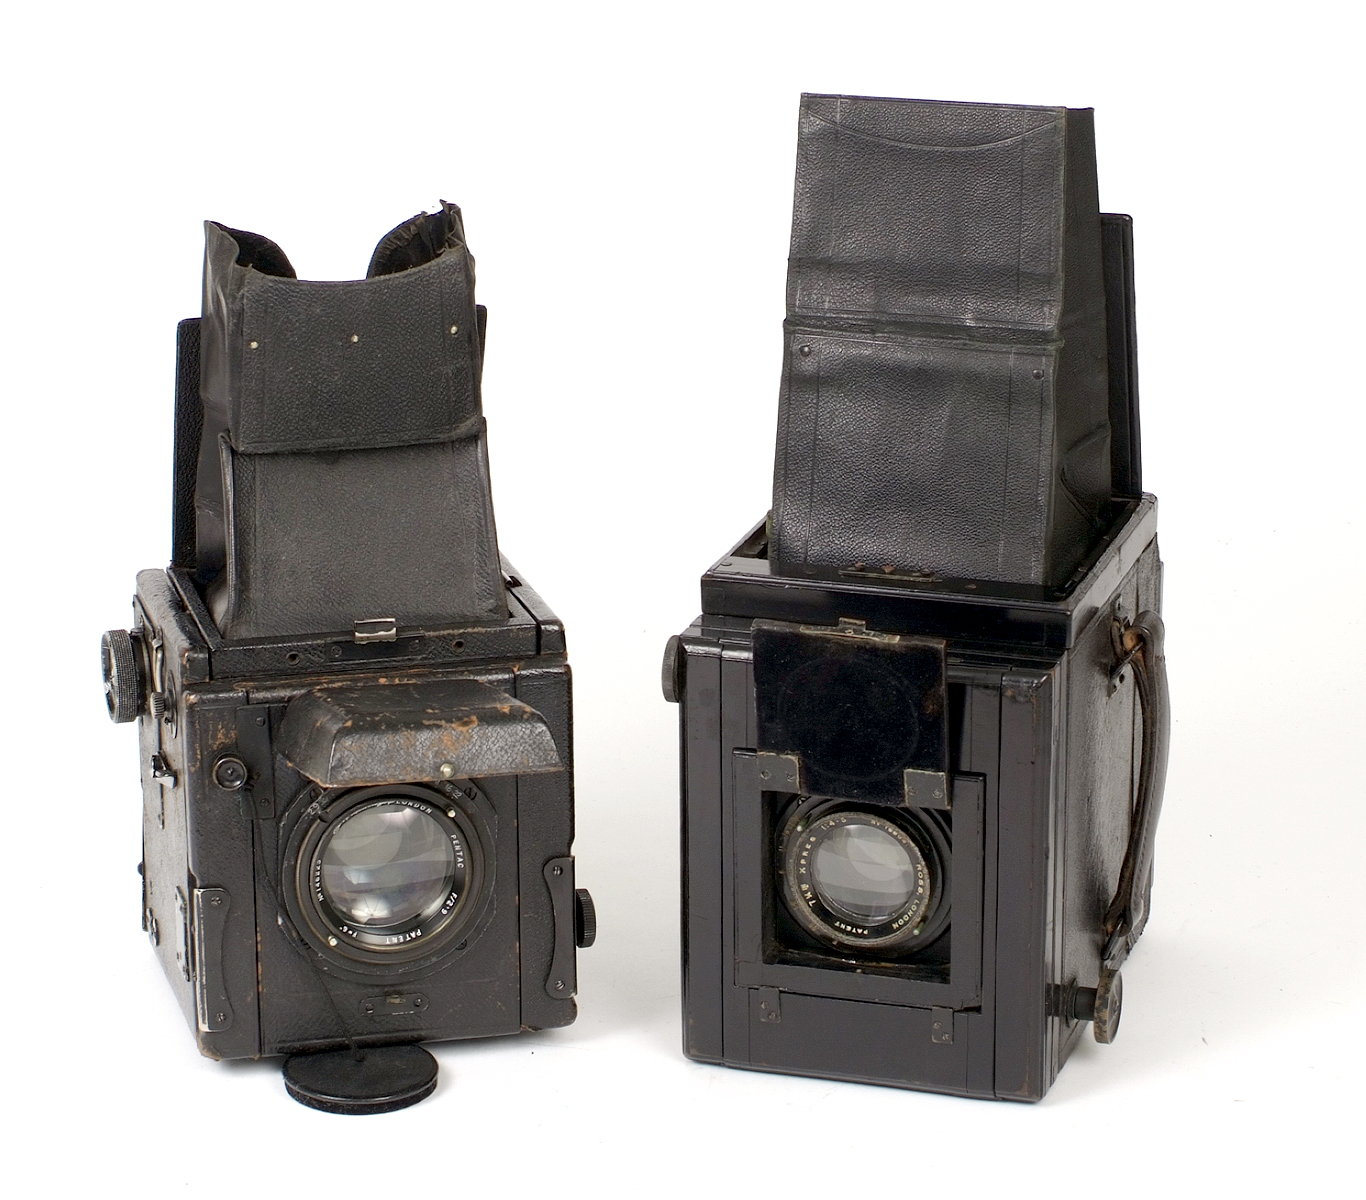 Ensign Special & Thornton Pickard Duplex Ruby Reflex Cameras.